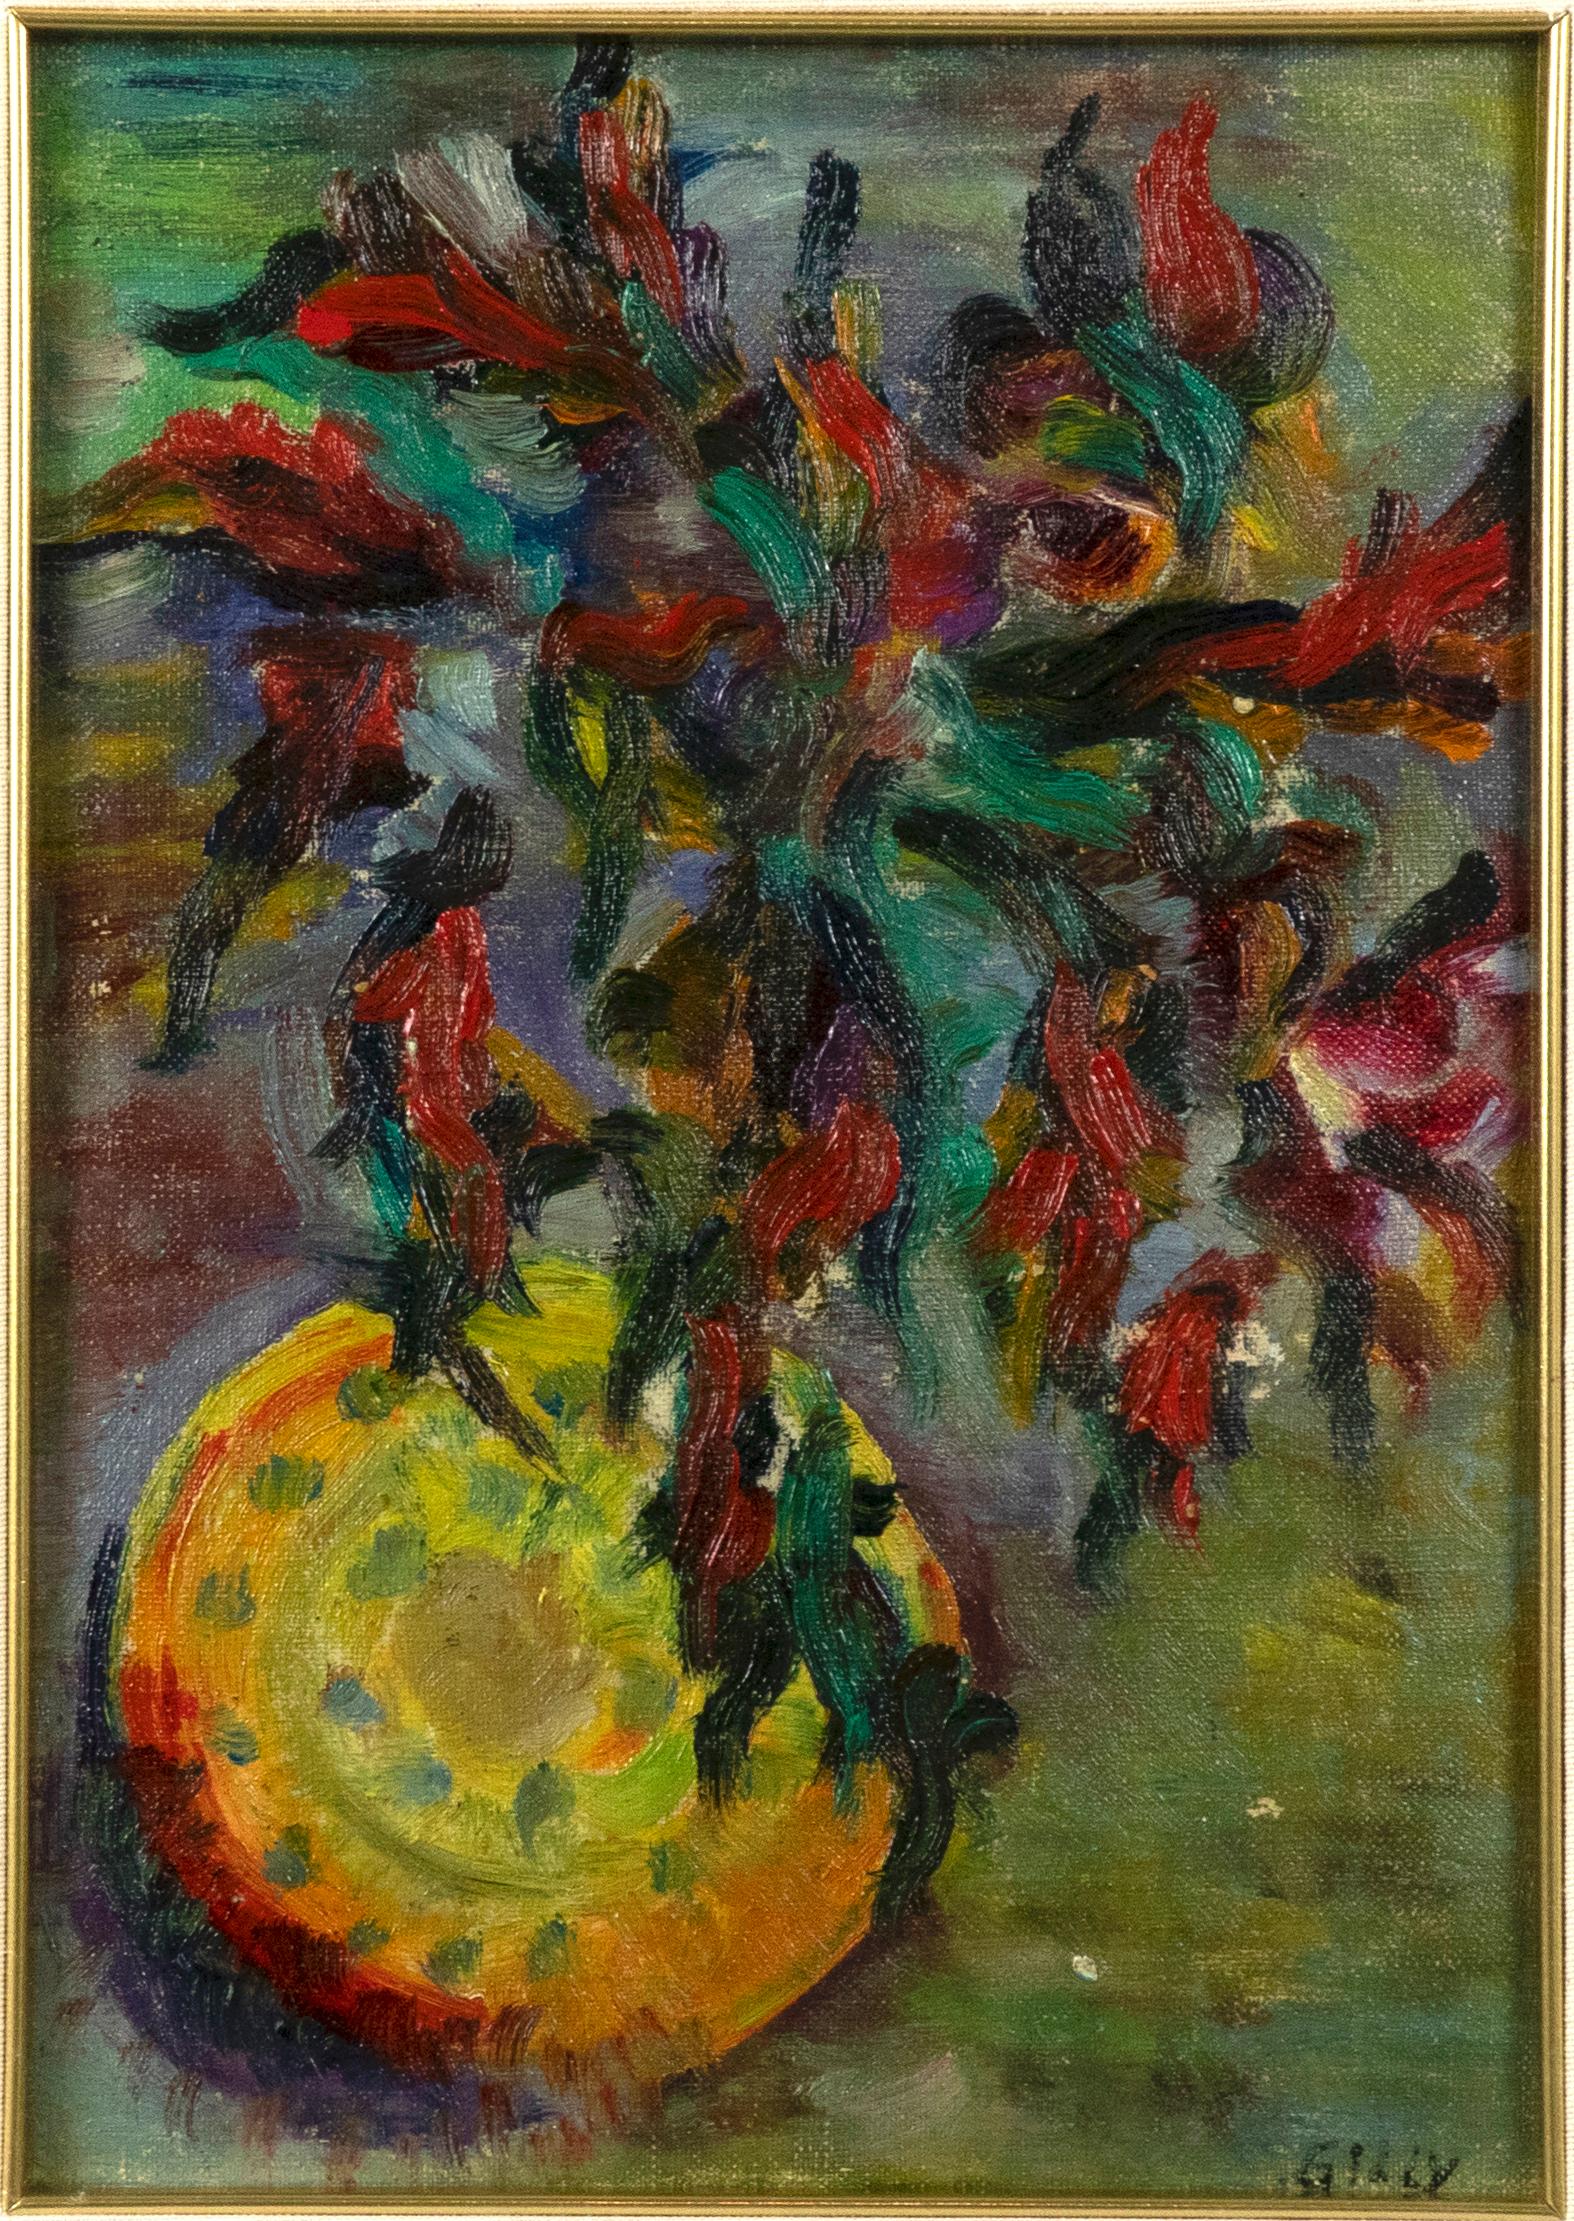 Flower Vase - Oil on Panel - Early 20th Century